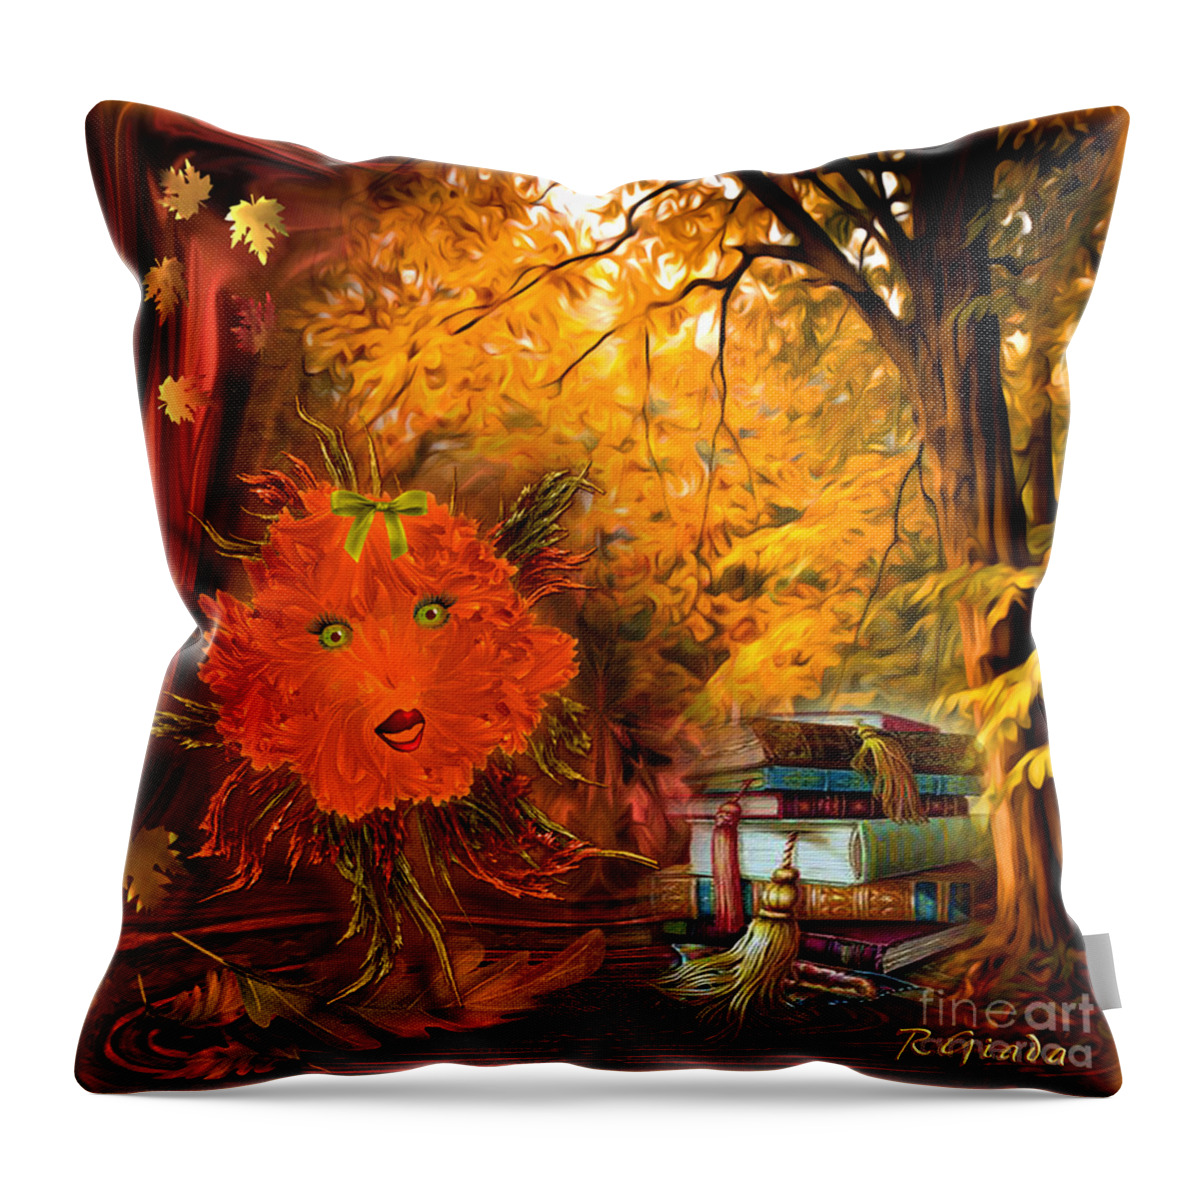 Fantasy Throw Pillow featuring the digital art Kikki the fluffy flower storyteller by Giada Rossi